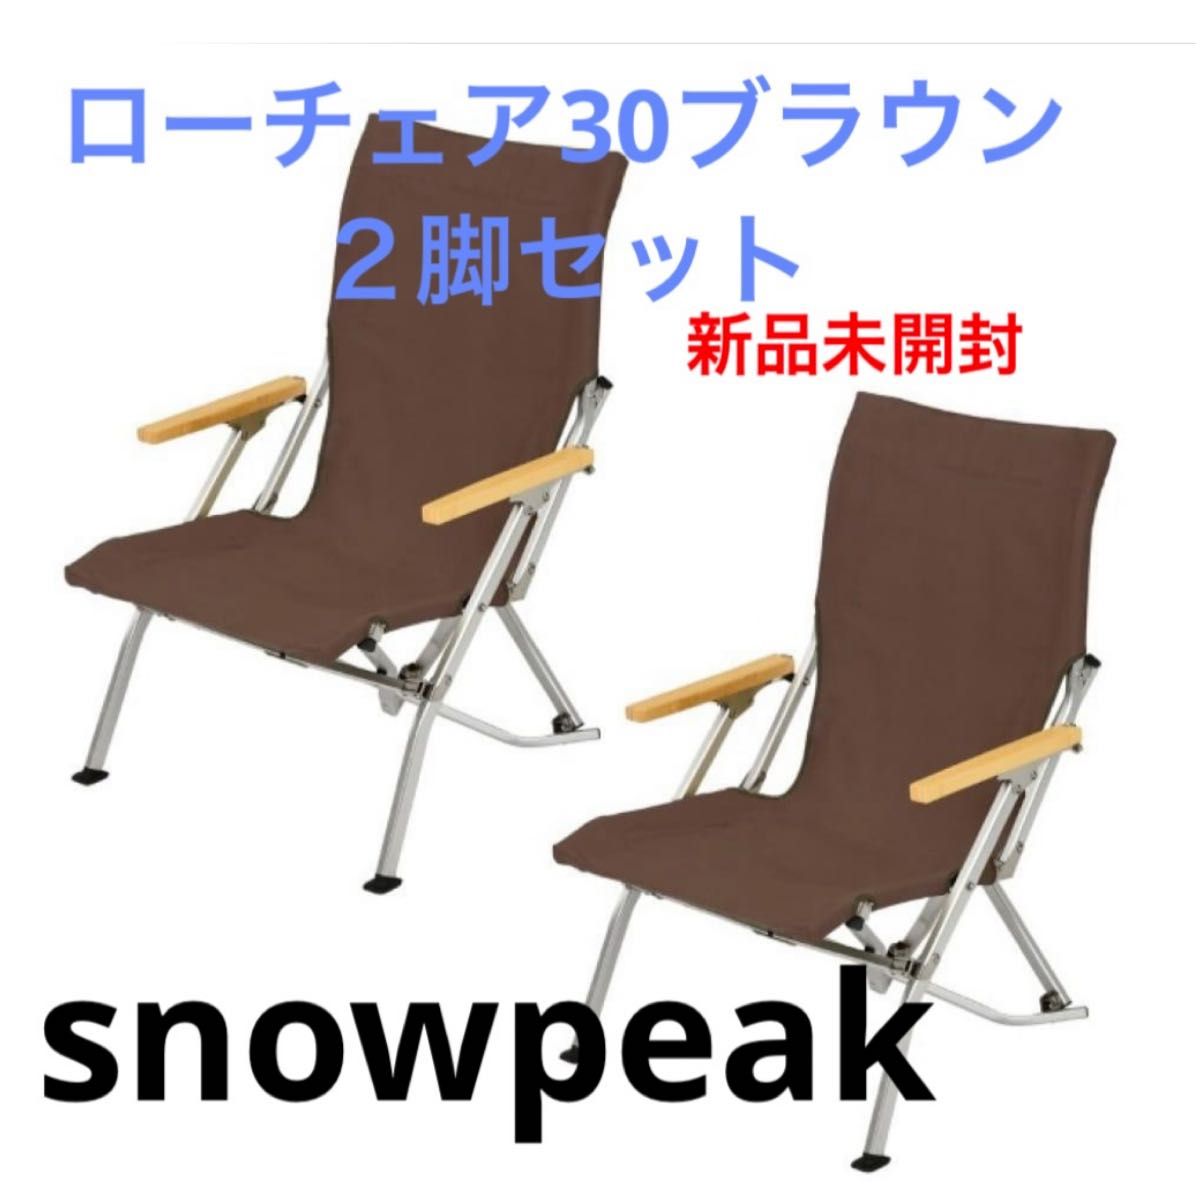 snowpeakスノーピーク ローチェア30 ブラウン２脚セットLV-091BR